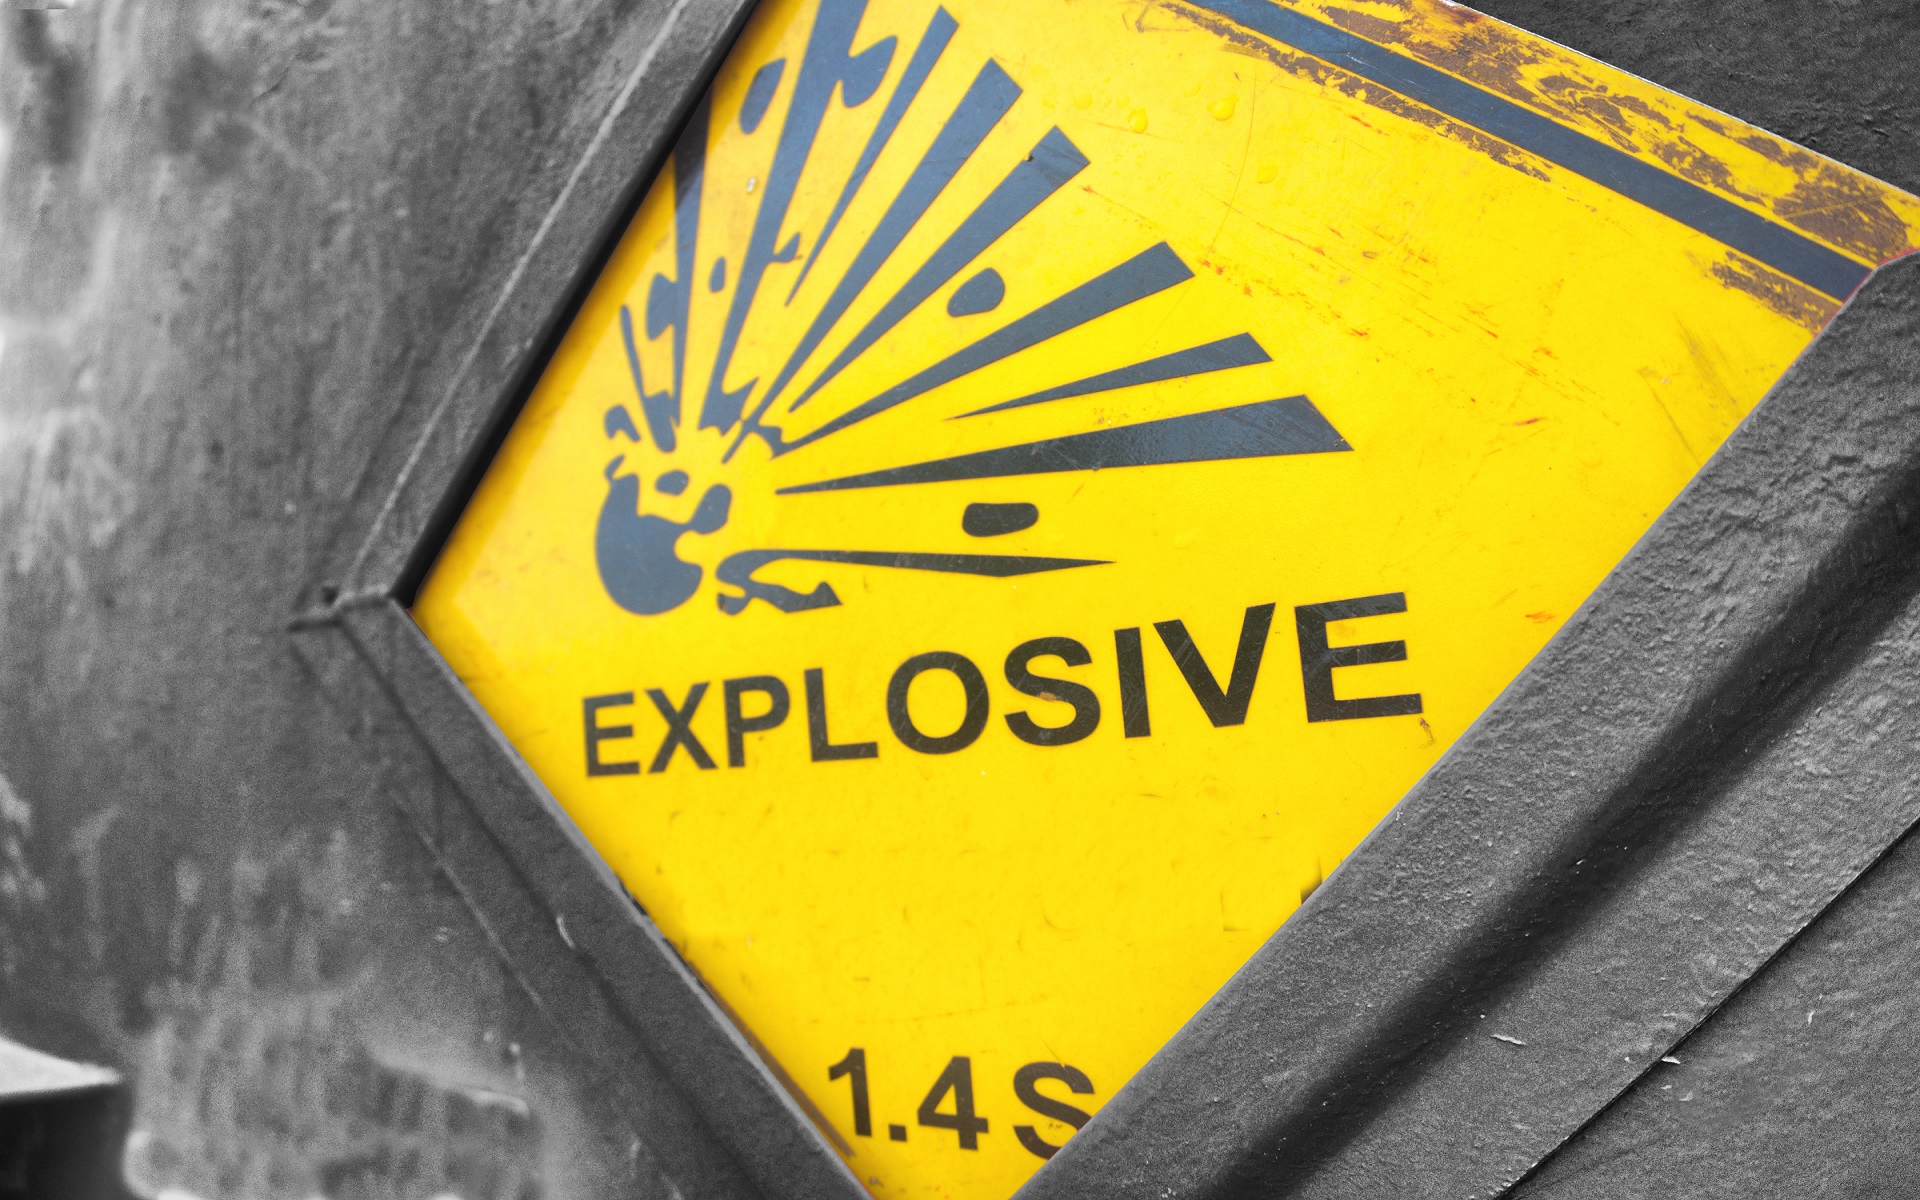 Explosive,Warning,Sign,On,The,Steel,Reinforce,Magazine,Carrier